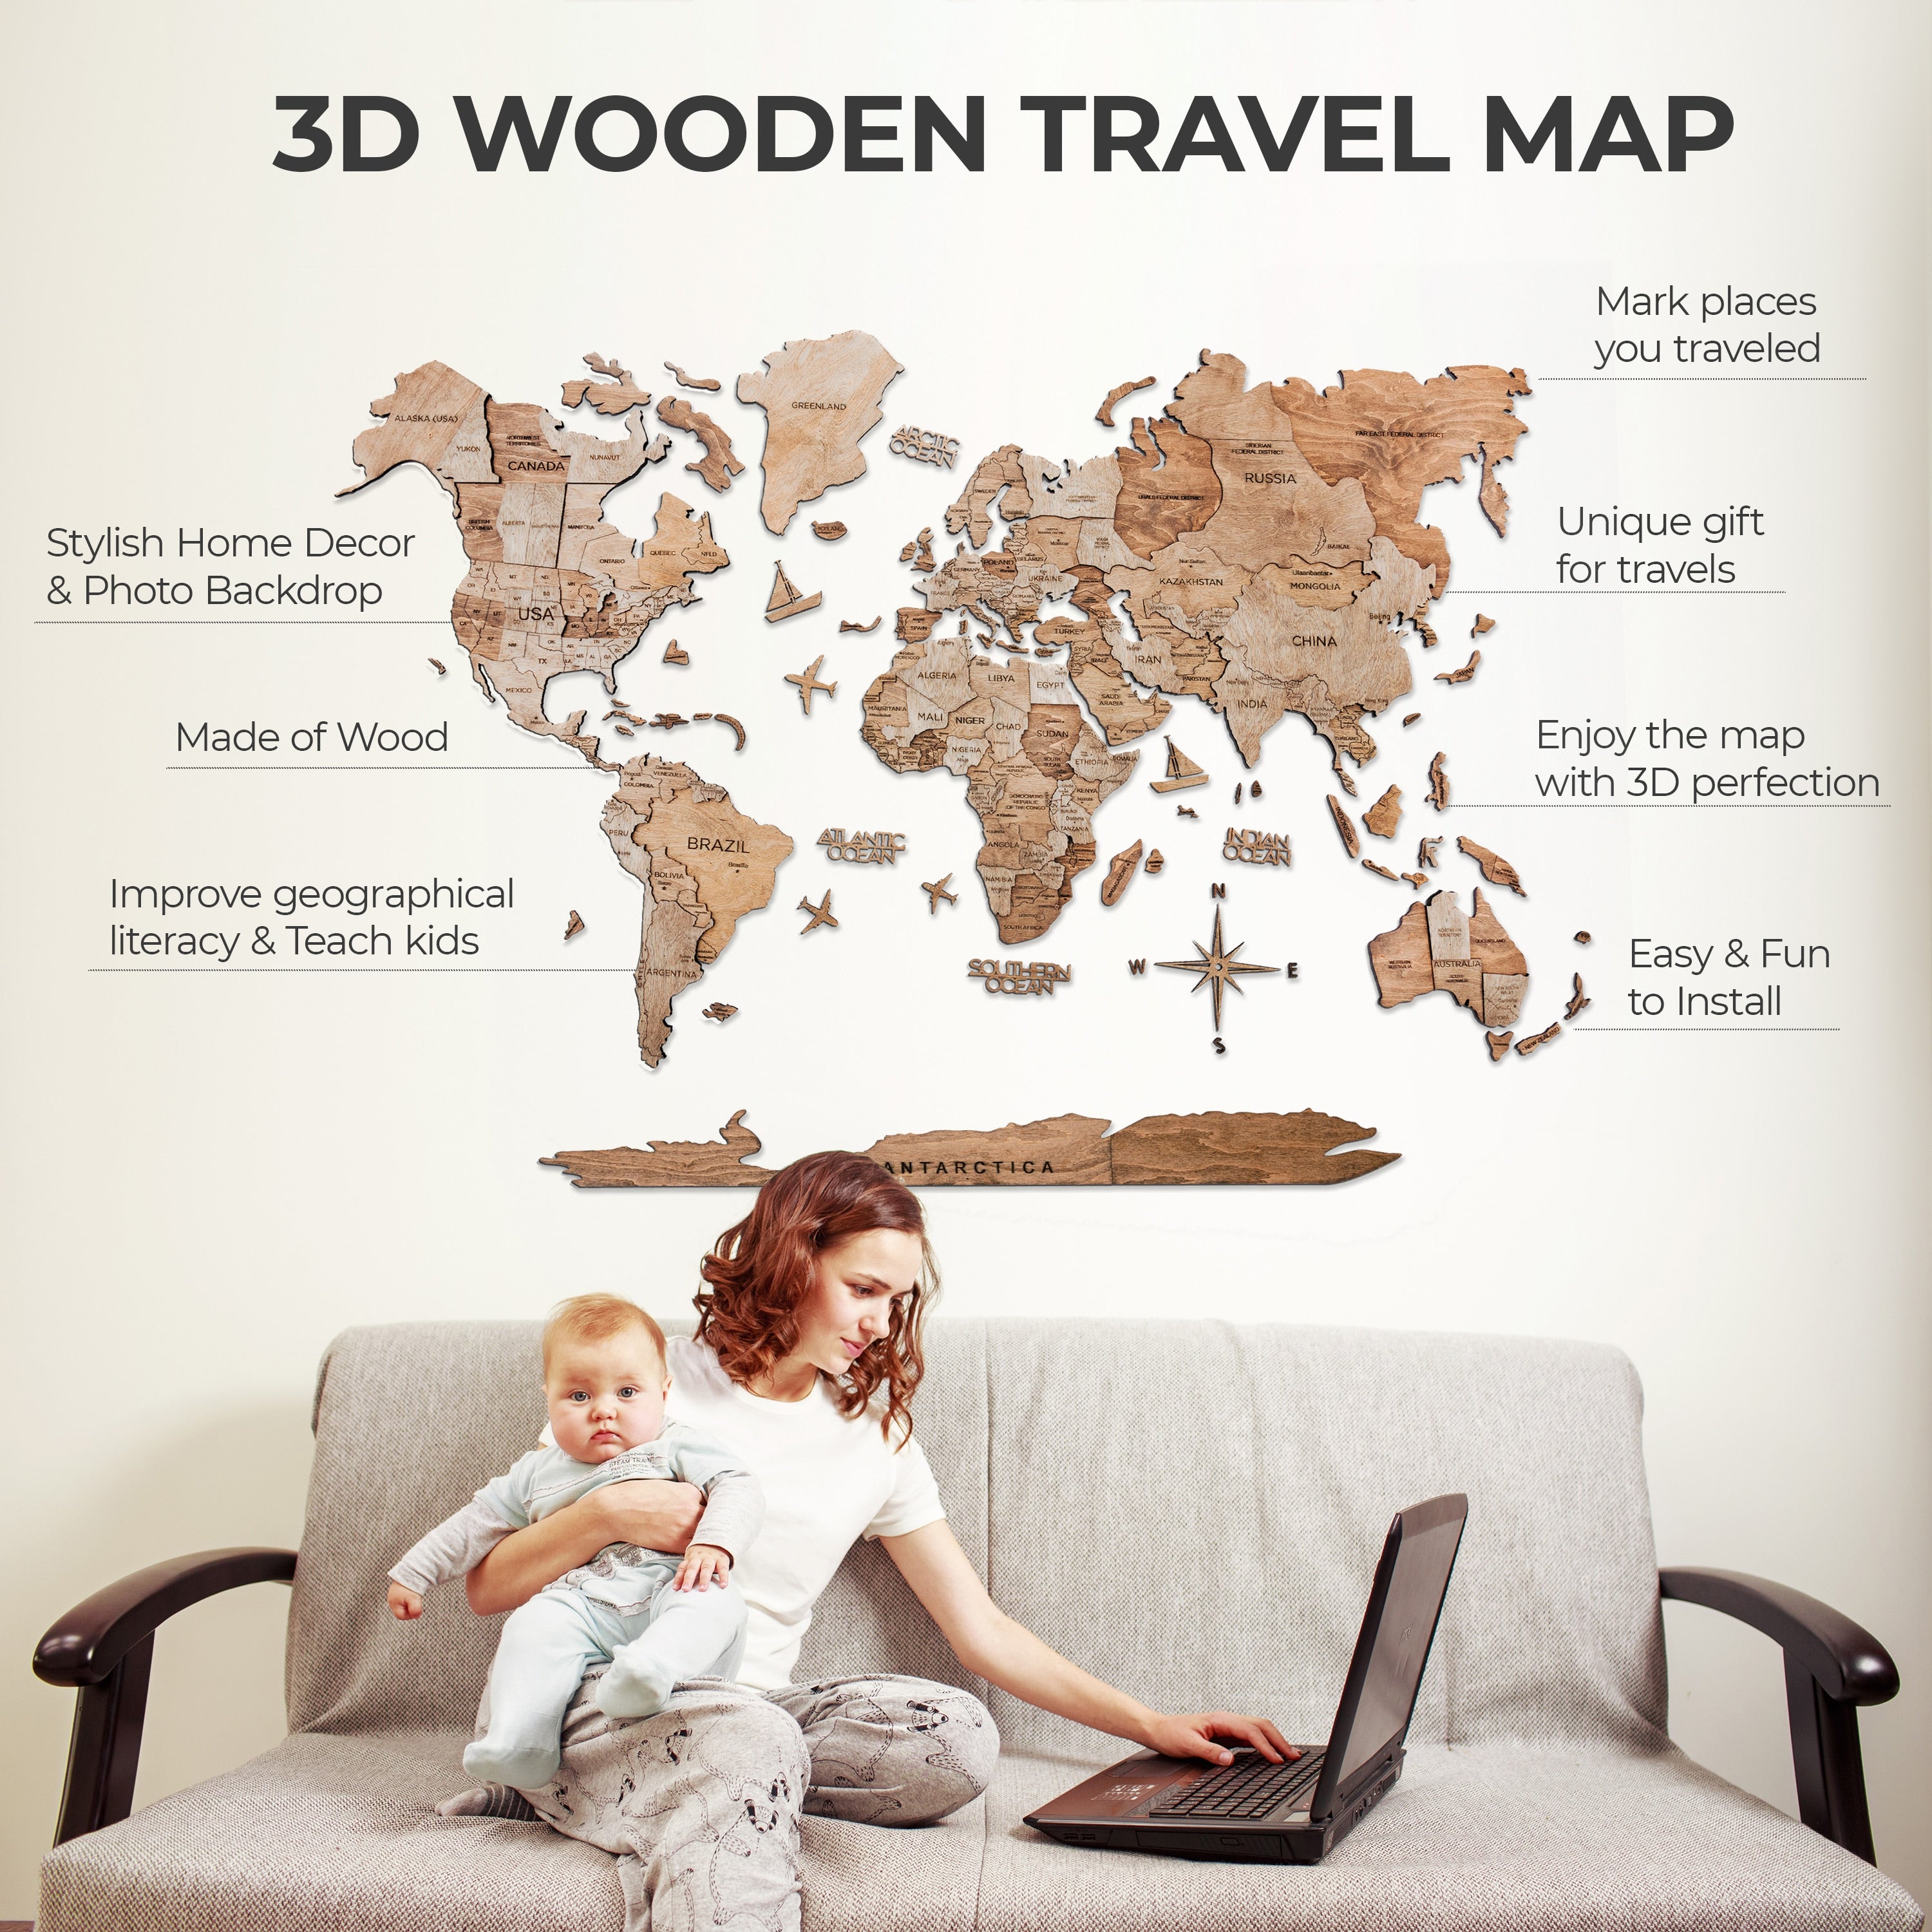 3D Wooden World Map Terra – Awesometik